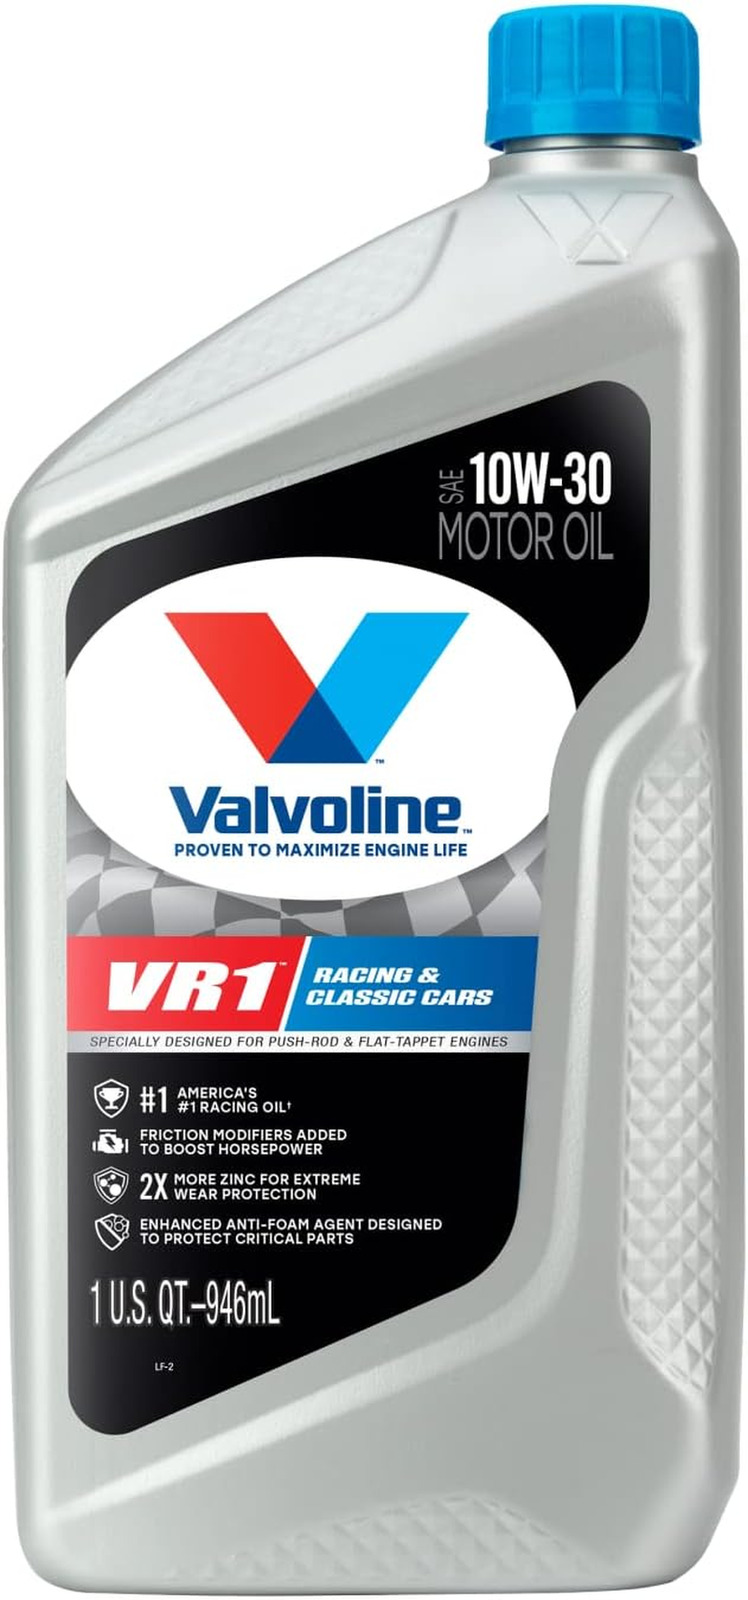 Valvoline VR1 Racing SAE 10W-30 High Performance High Zinc Motor Oil 1 QT Case